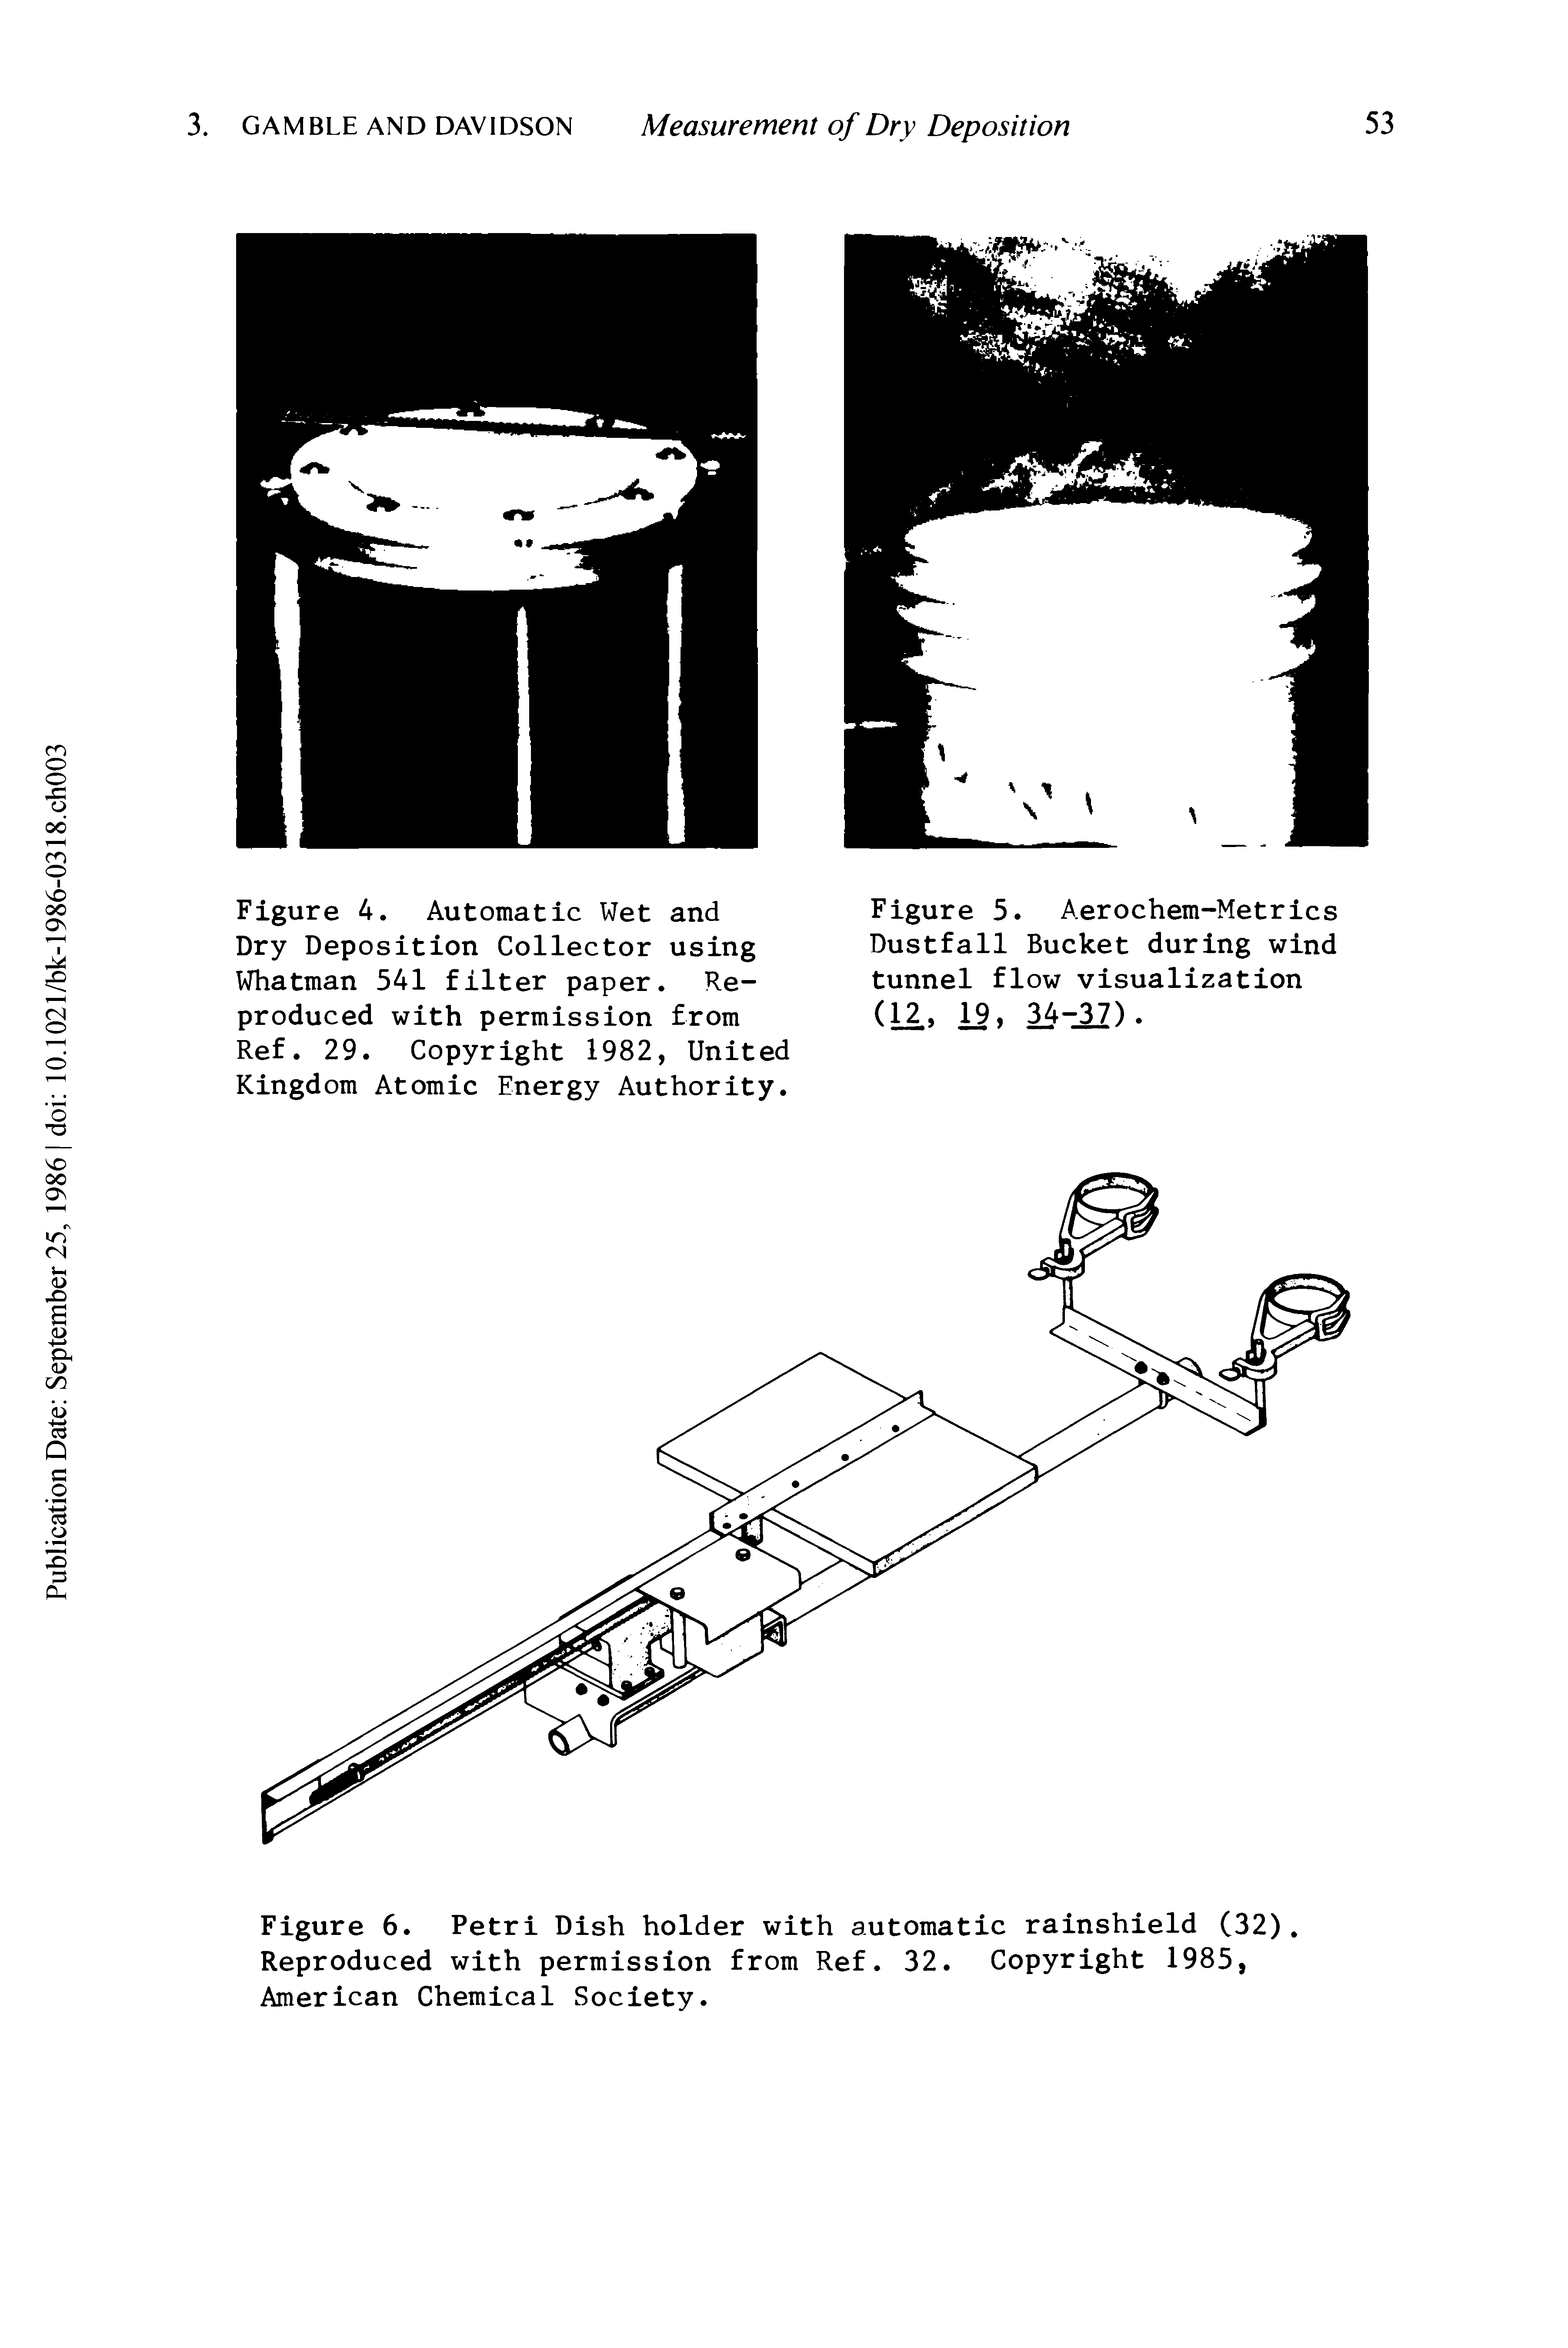 Figure 5. Aerochem-Metrics Dustfall Bucket during wind tunnel flow visualization (il, 19, 34- ).